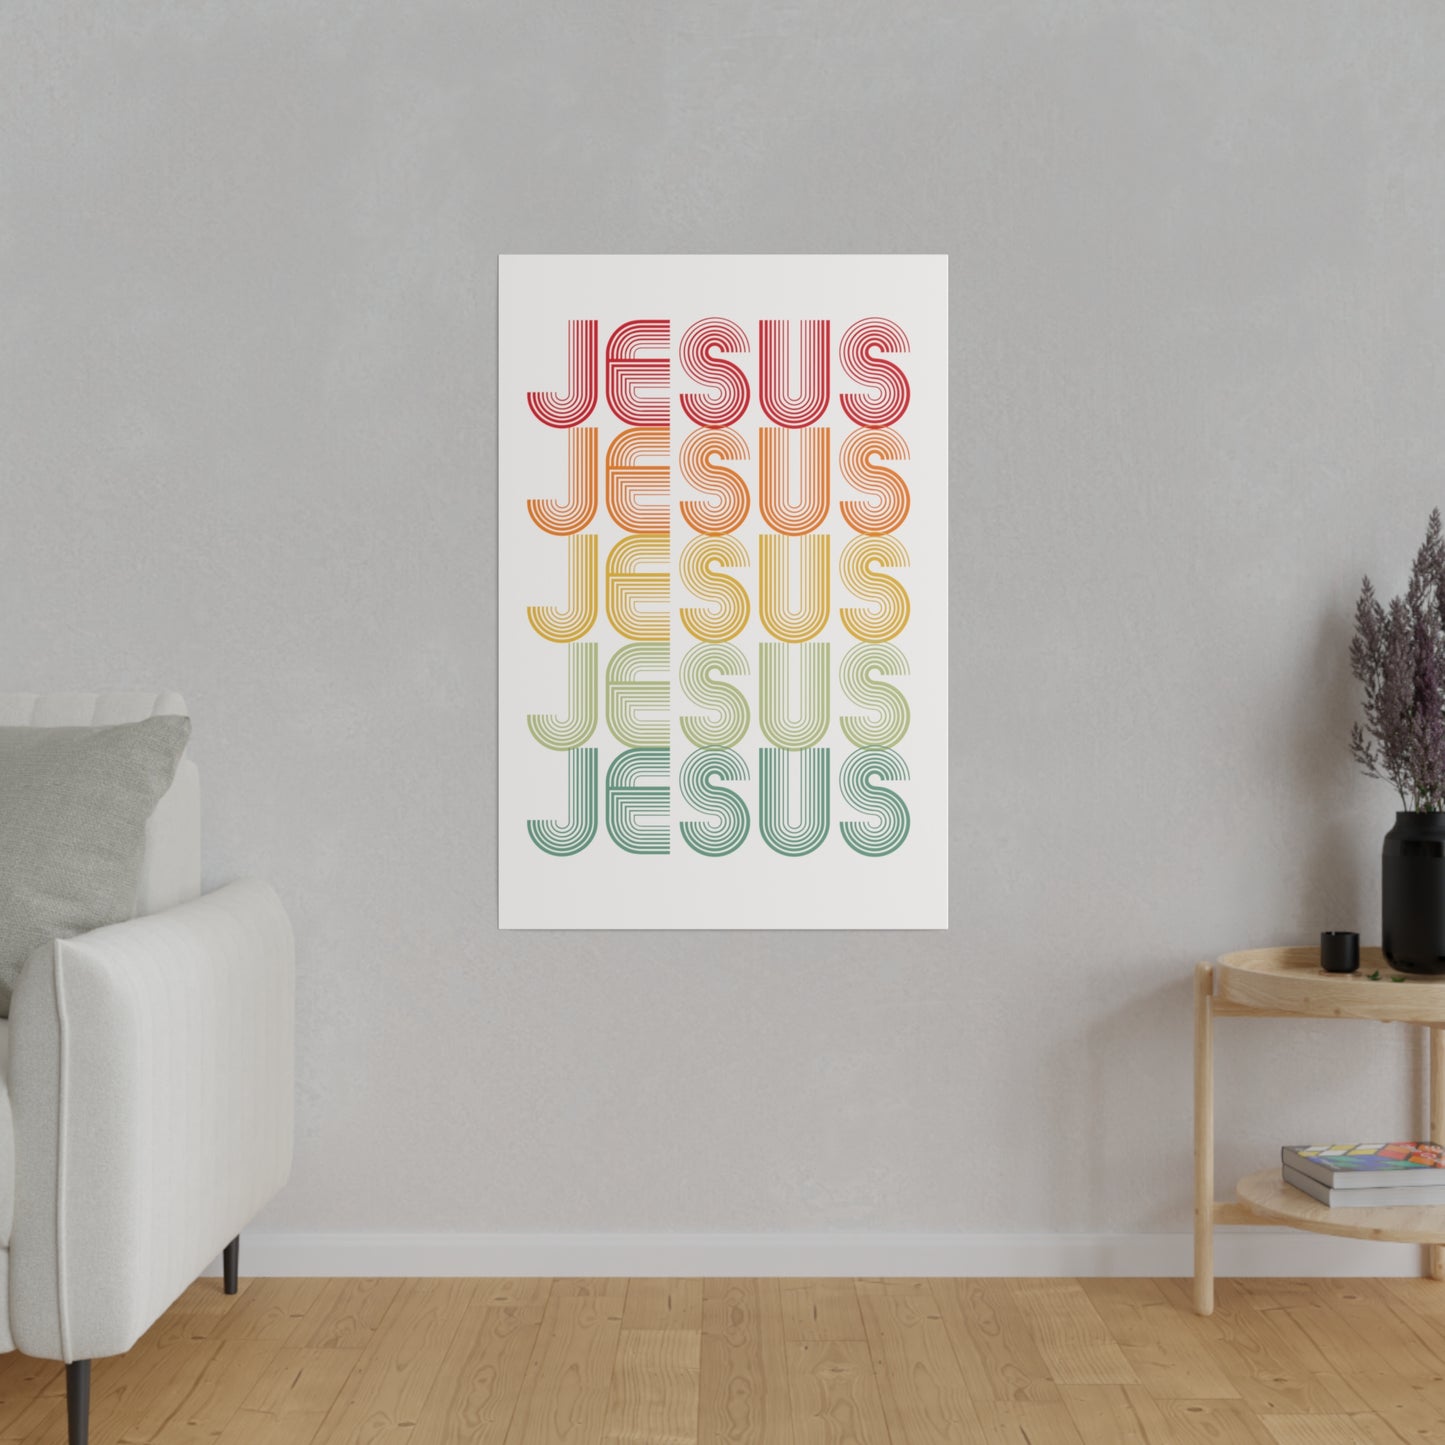 RETRO JESUS Wall Art Canvas Print